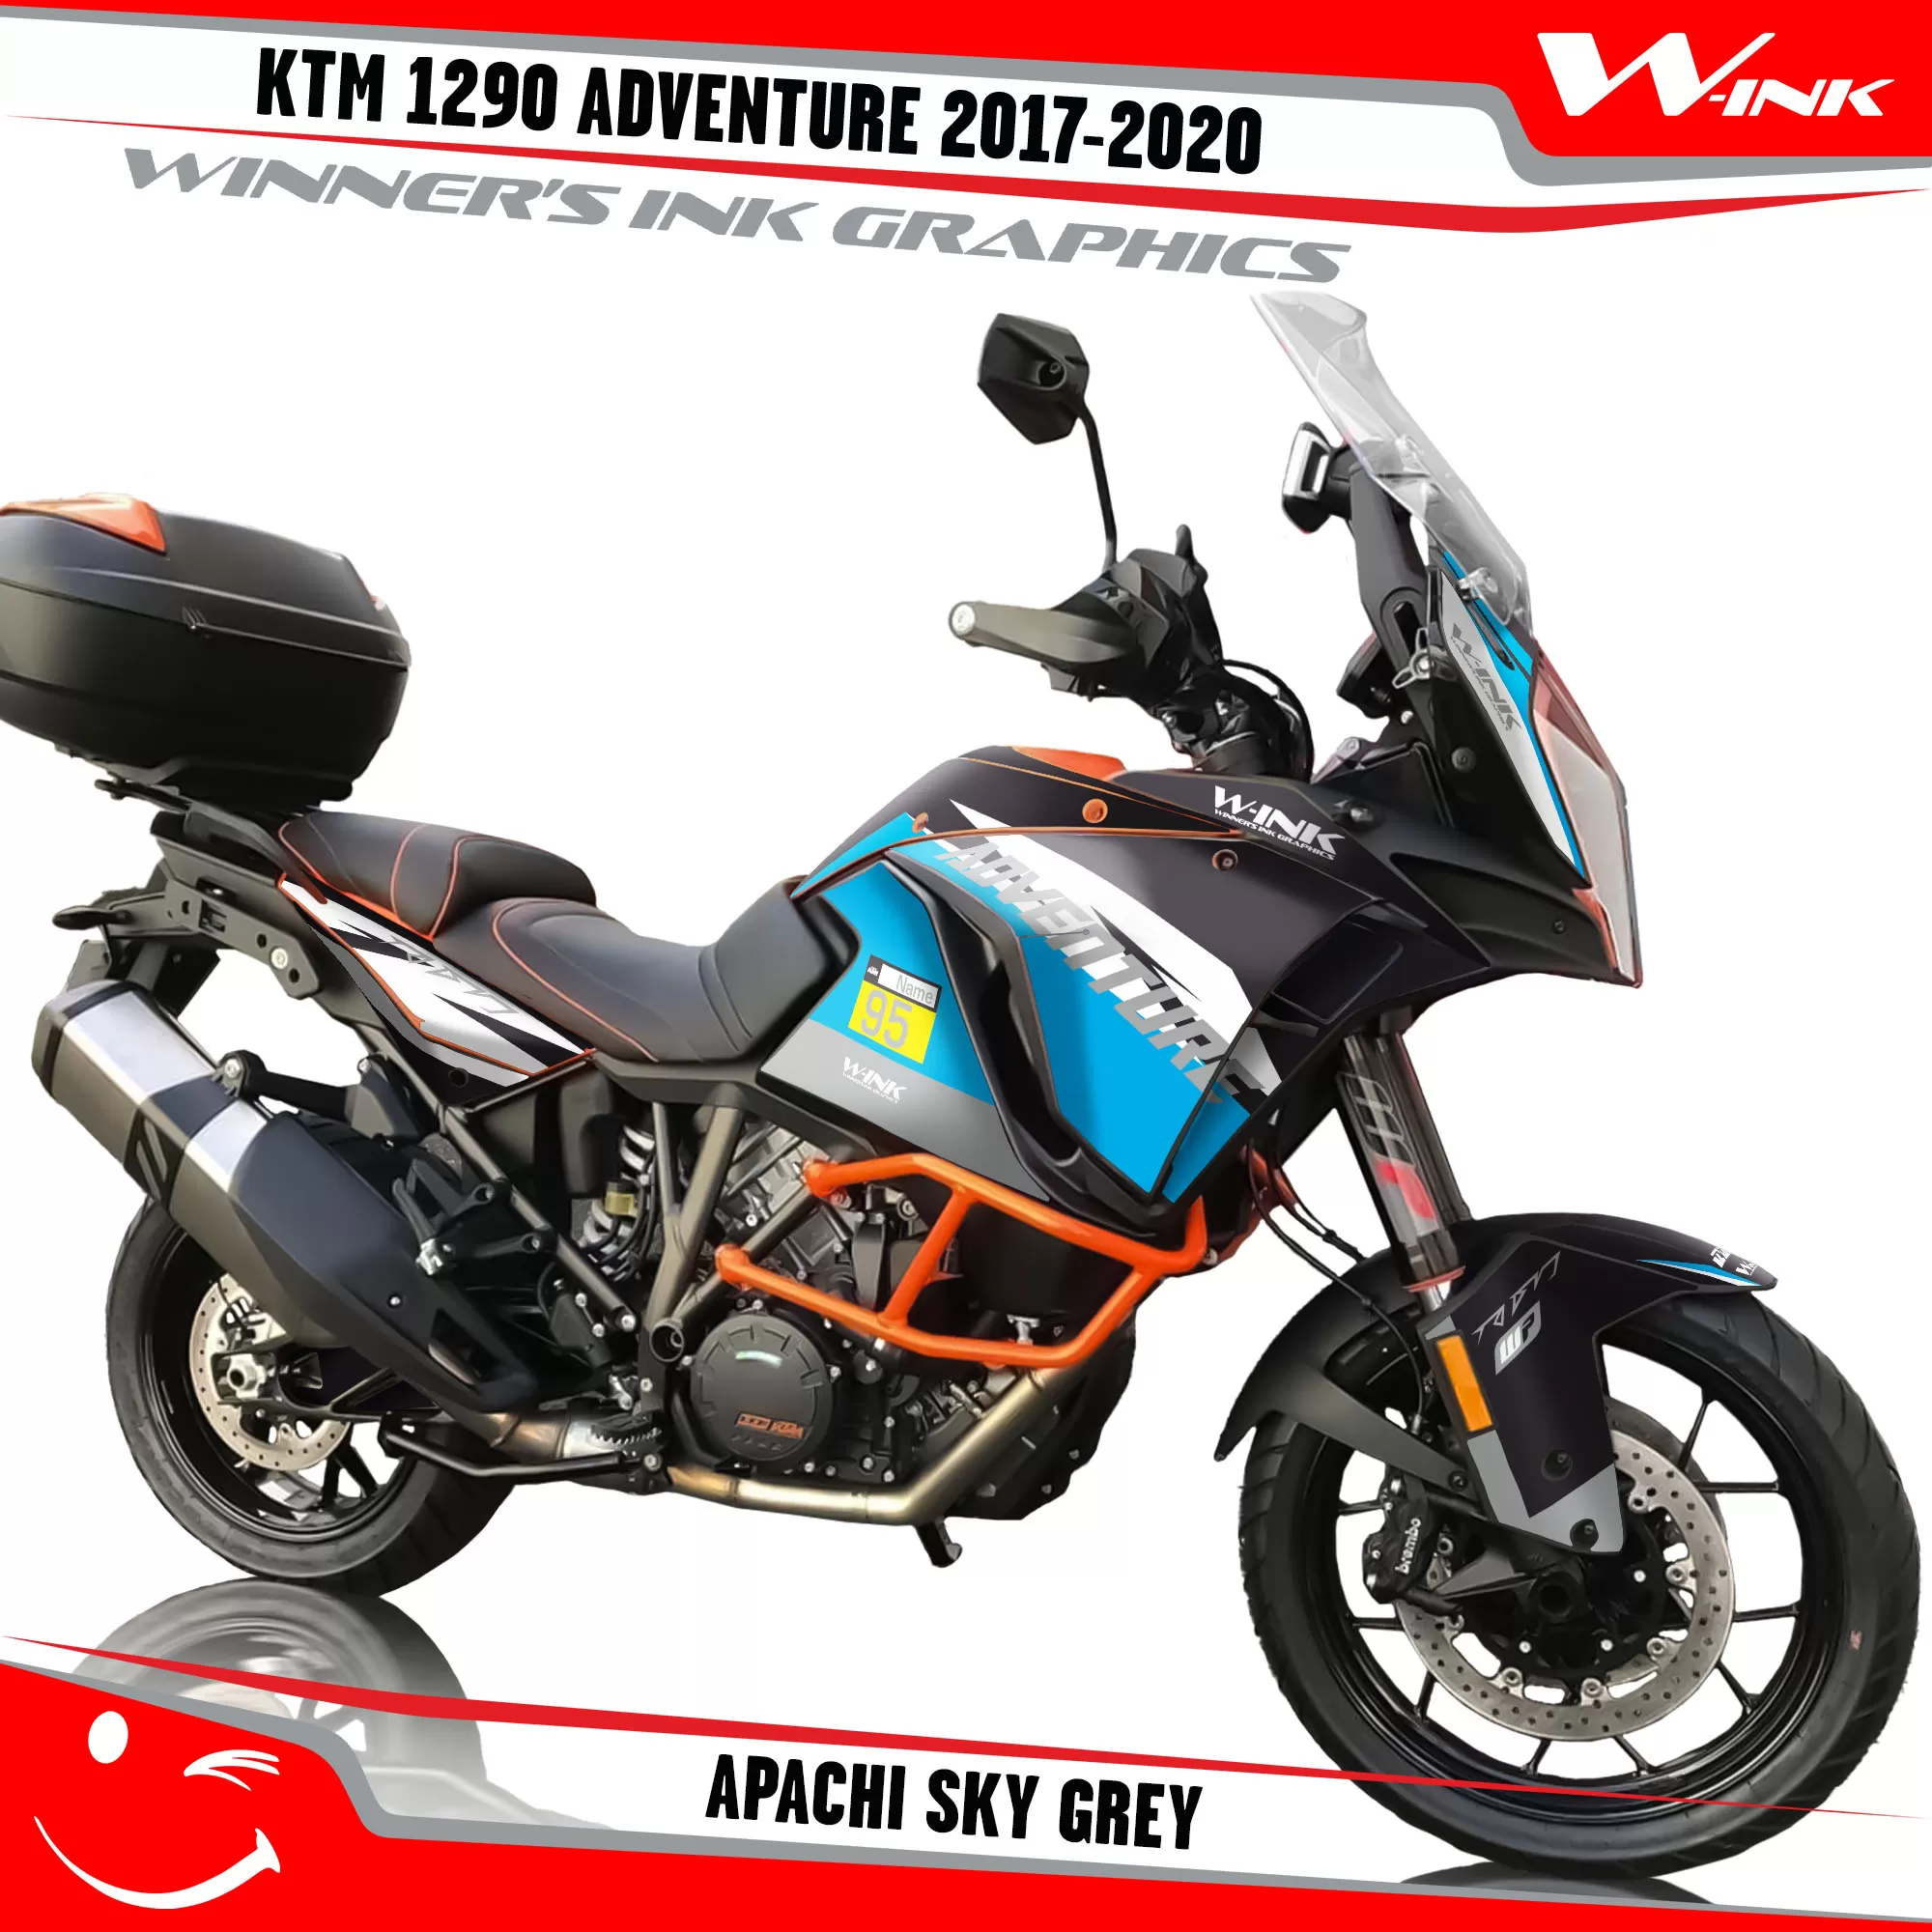 KTM-Adventure-1290-2017-2018-2019-2020-graphics-kit-and-decals-Apachi-Sky-Grey